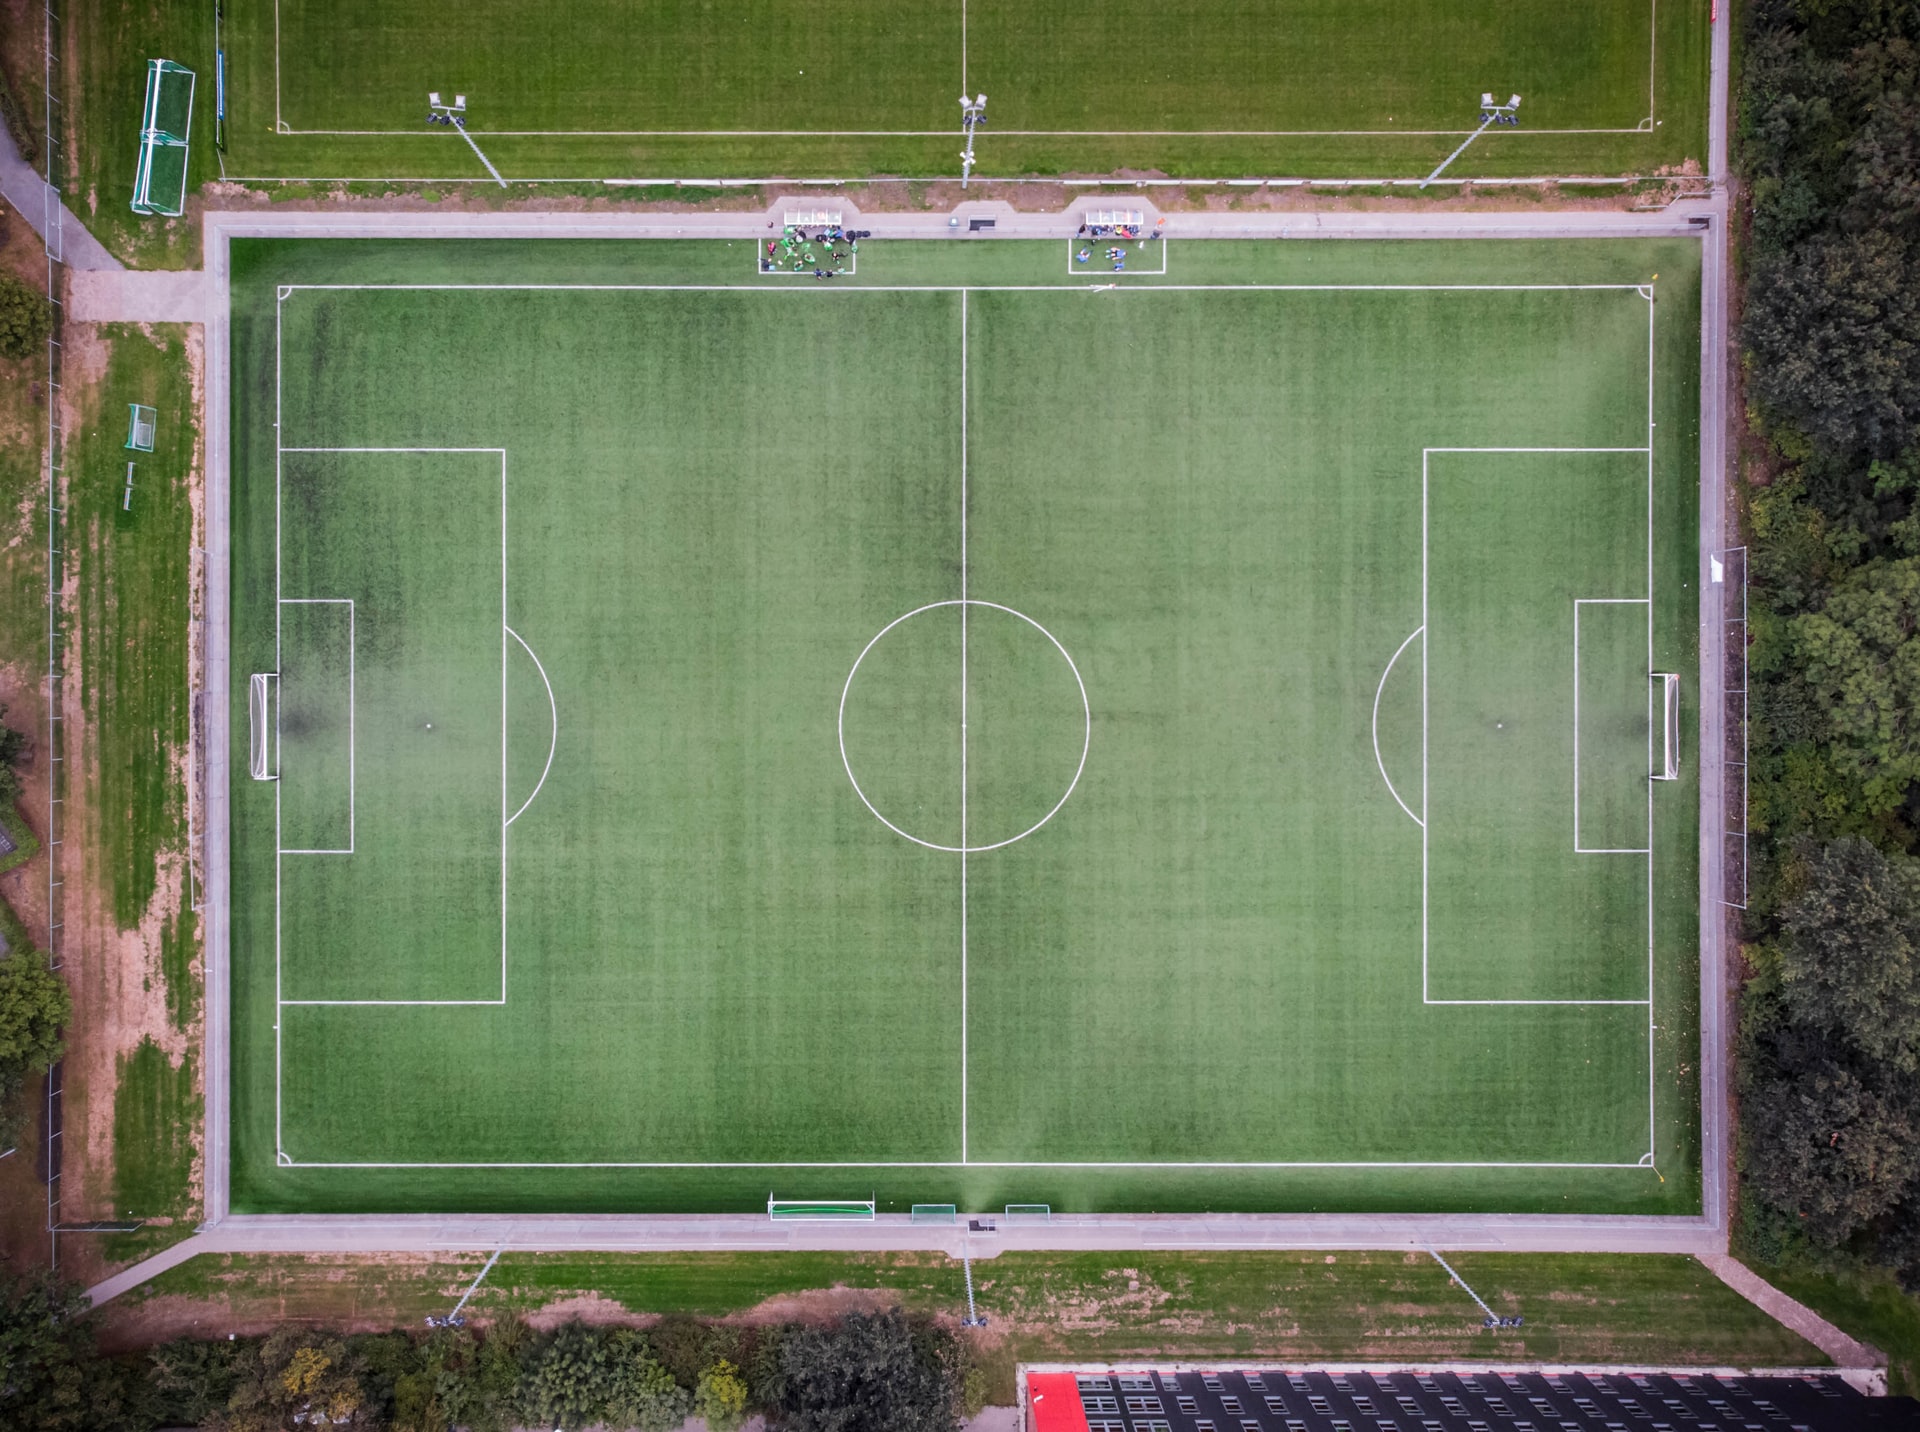 empty football pitch pexels